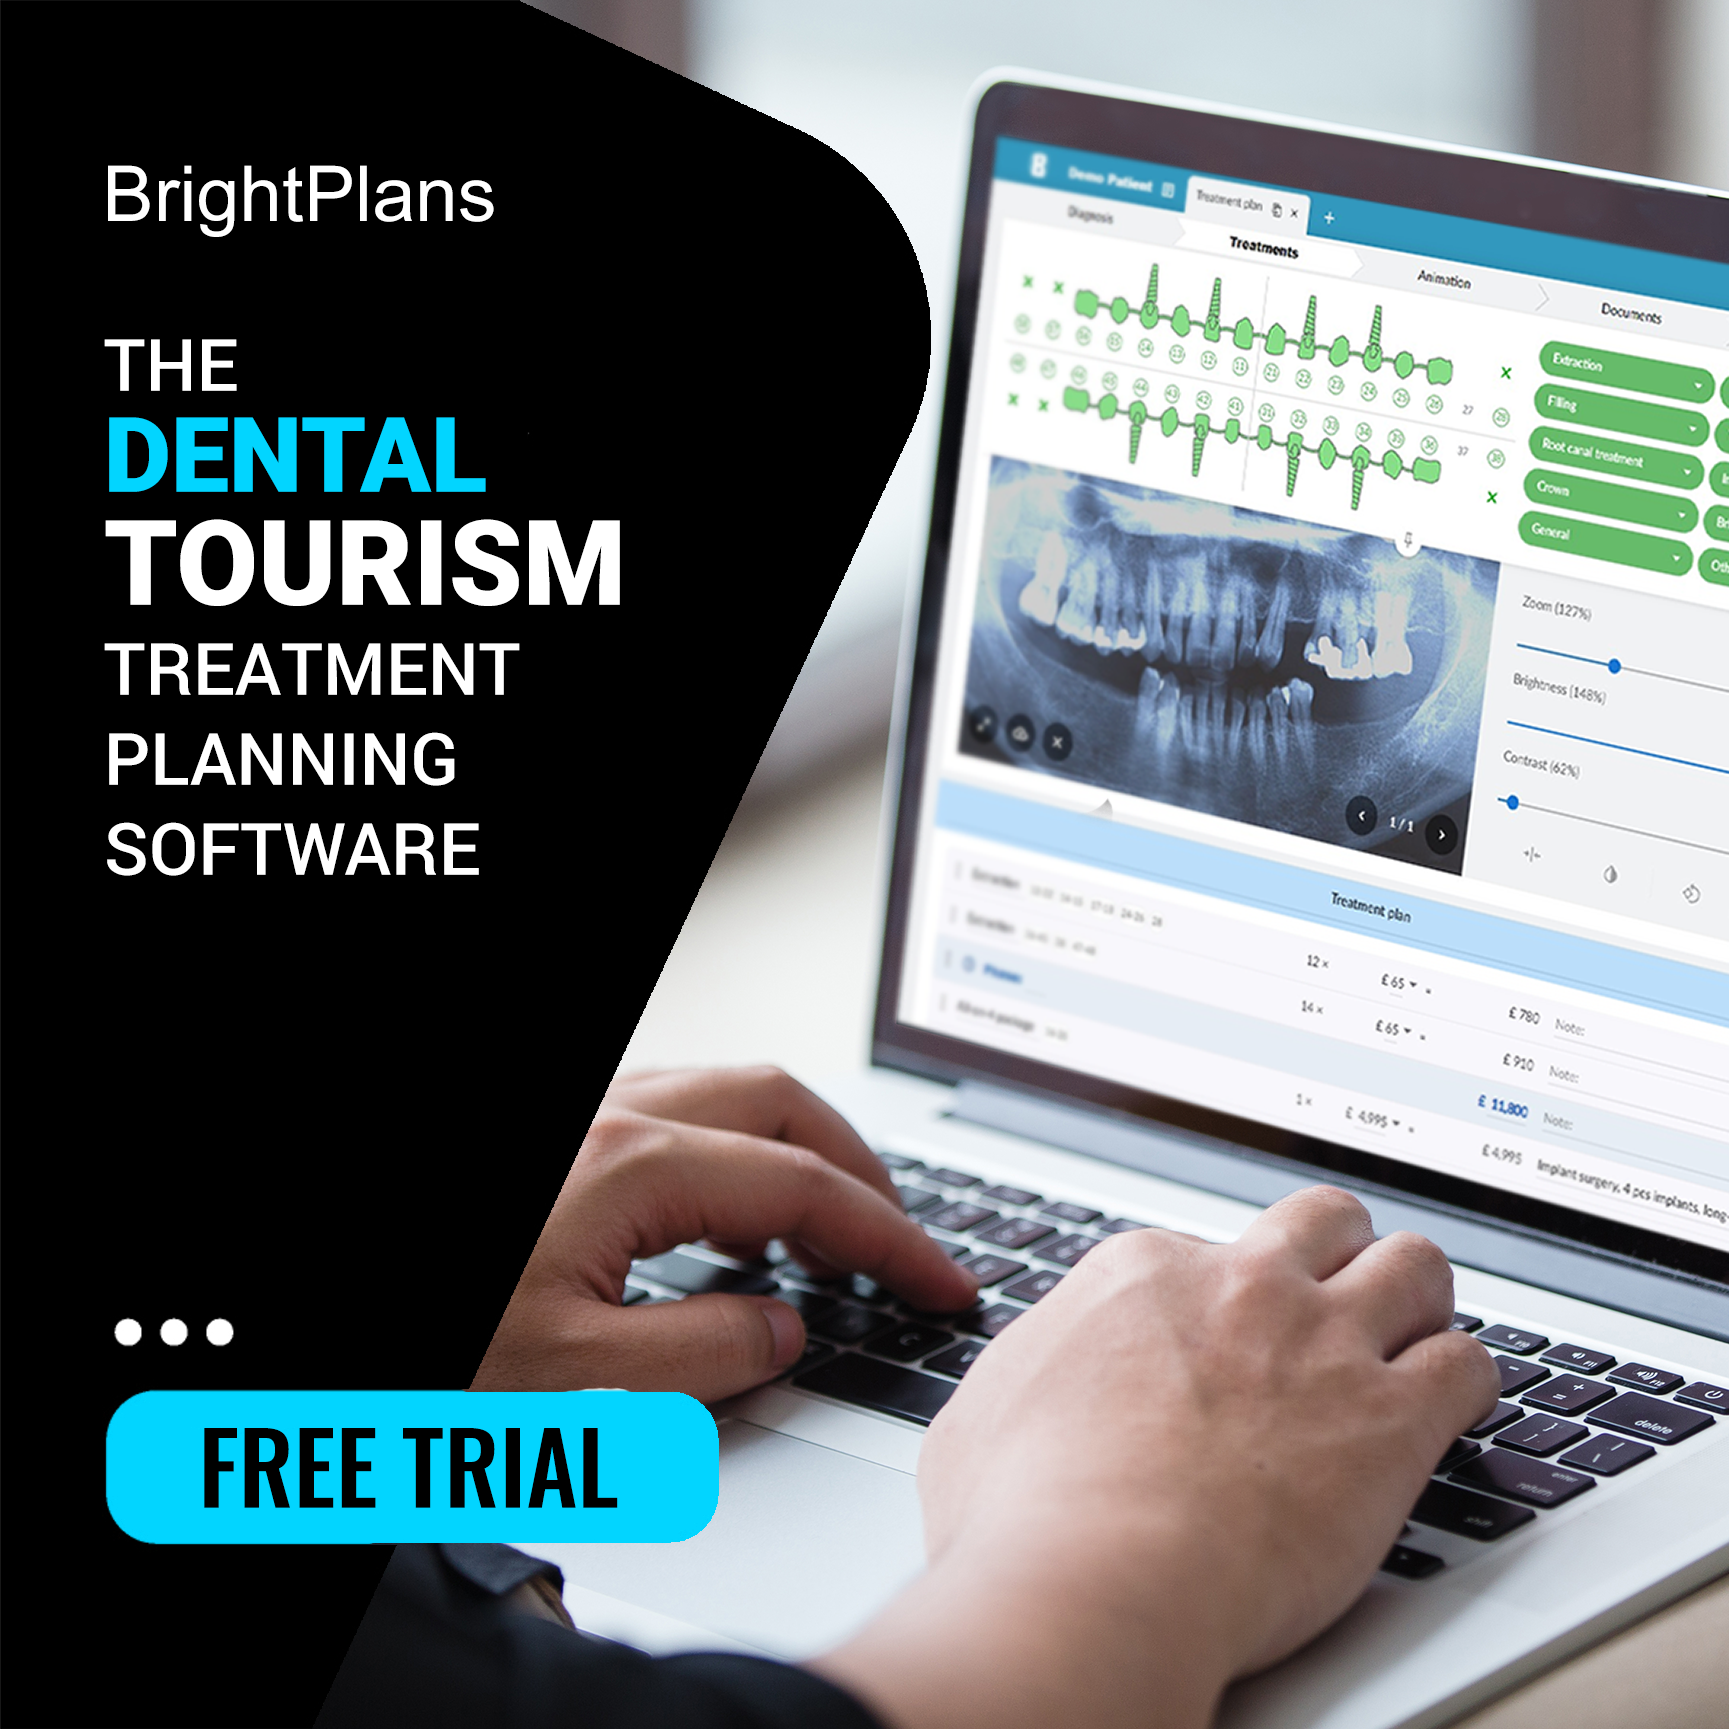 BrightPlans - The Dental Tourism Treatment Planning Software